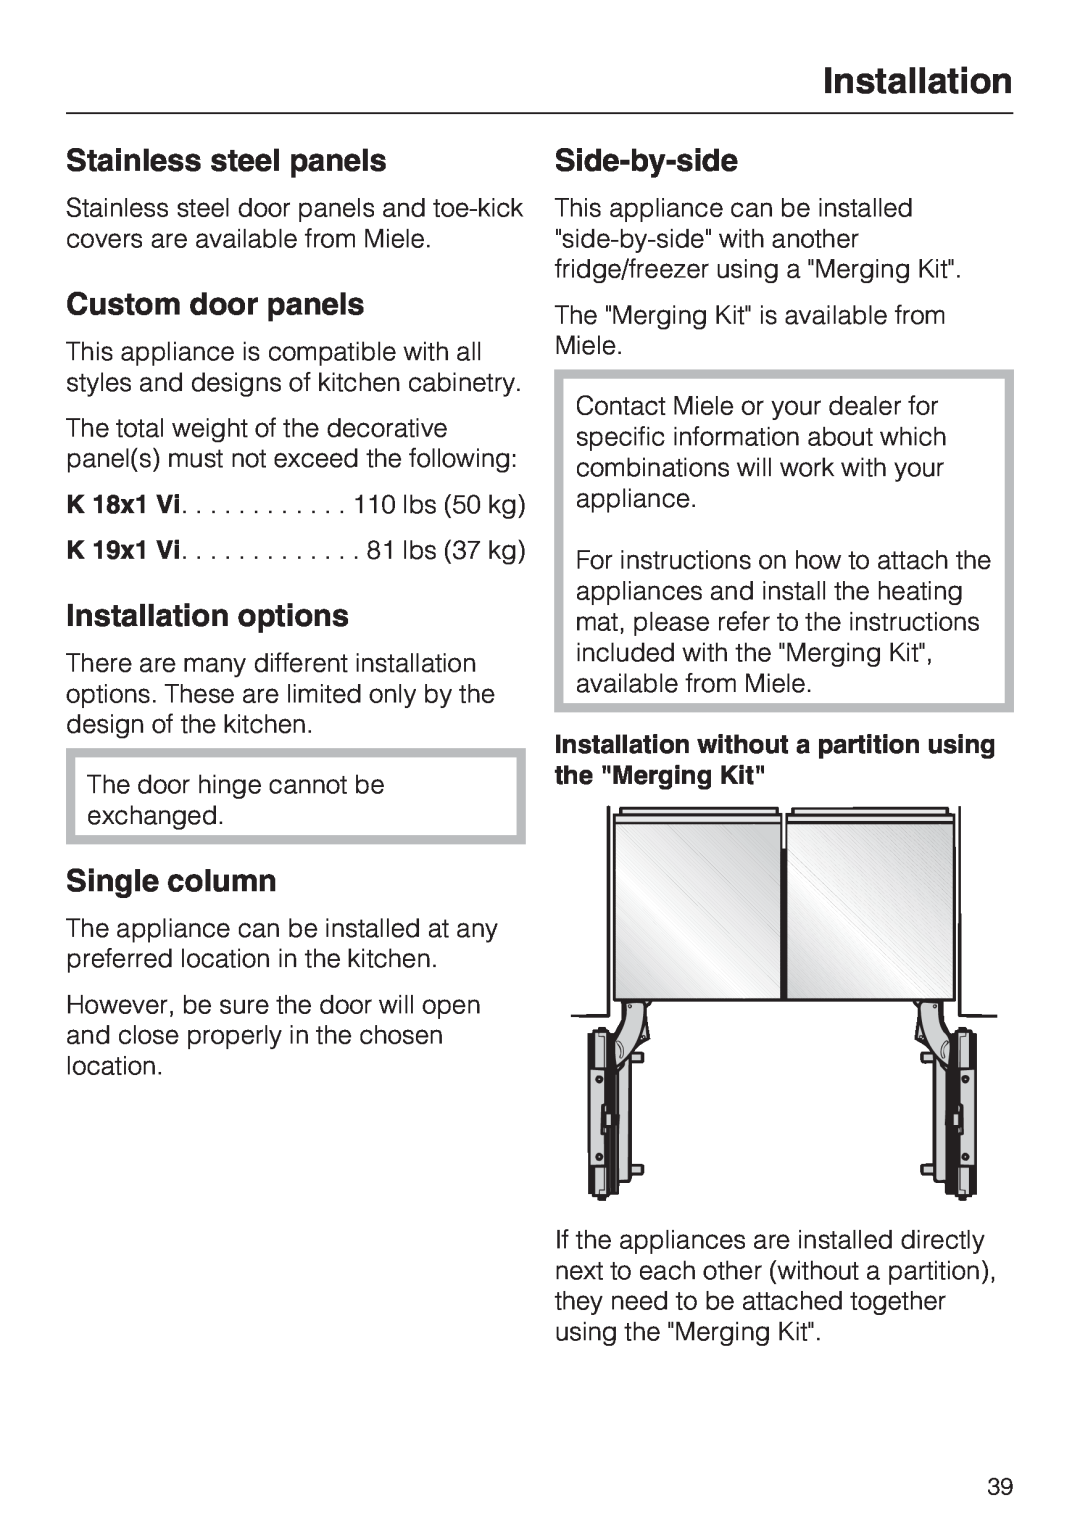 Miele K 1811 Vi, K 1911 Vi Stainless steel panels, Custom door panels, Installation options, Single column, Side-by-side 